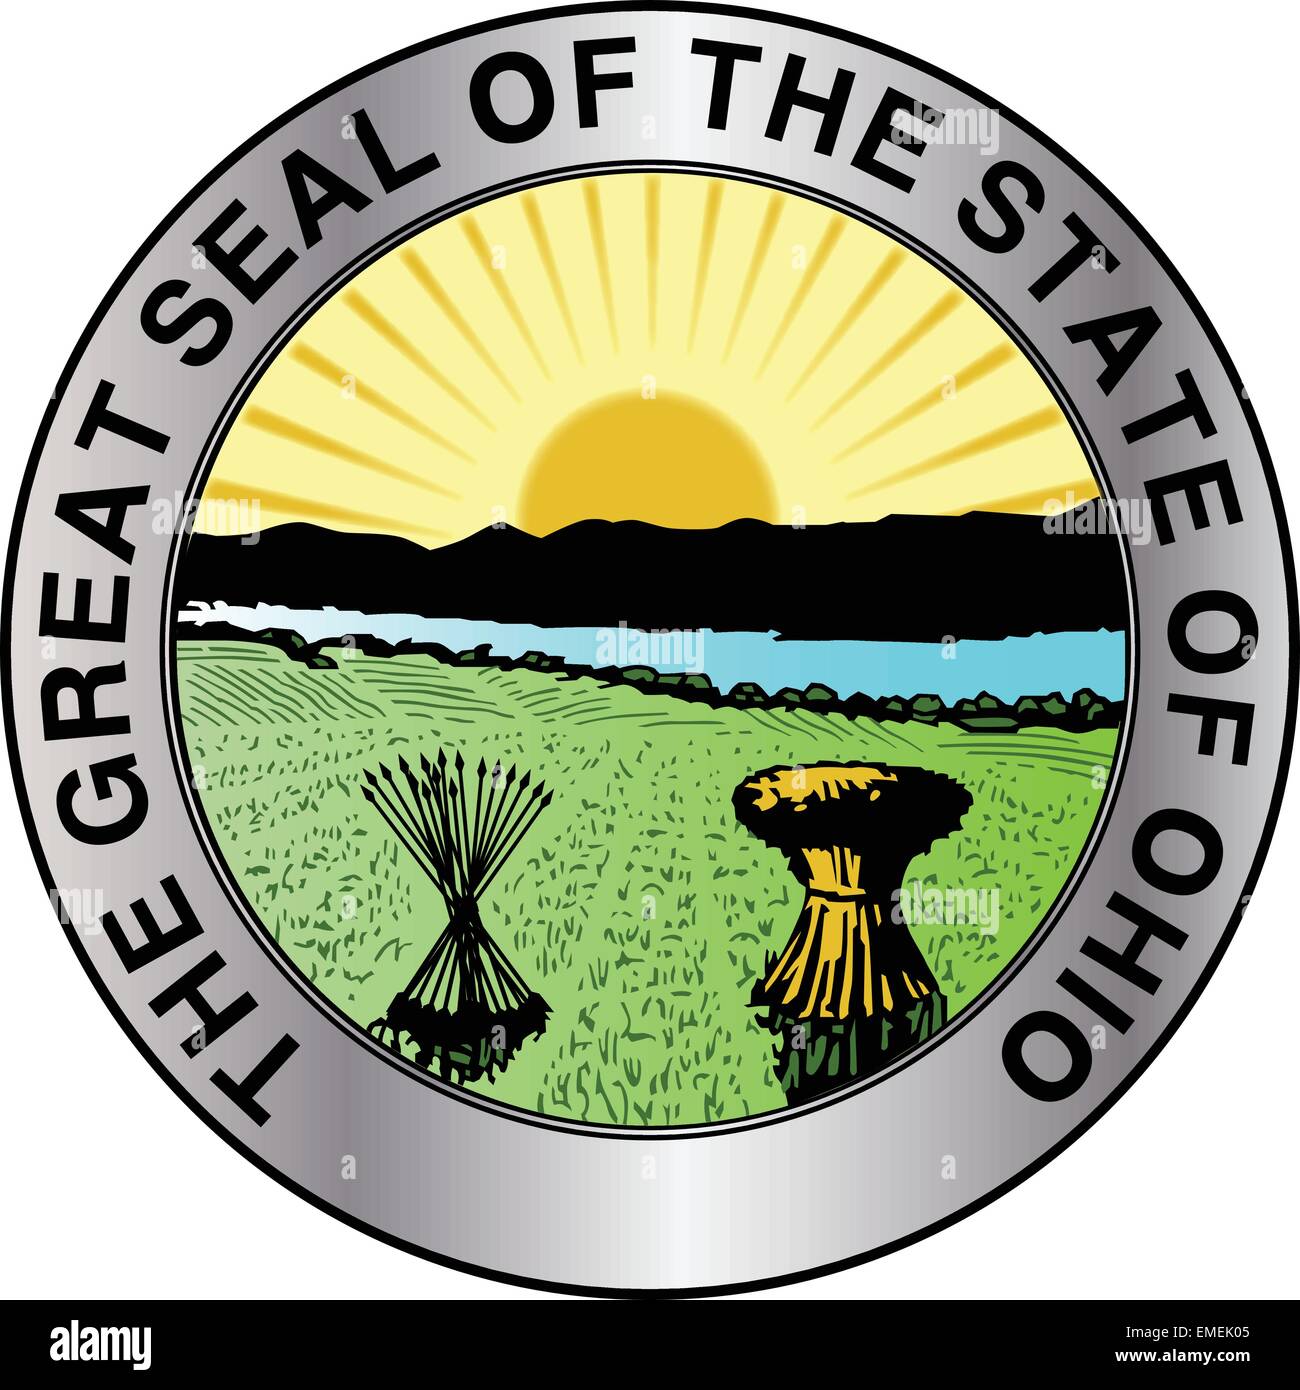 Ohio State Seal Stock Vector